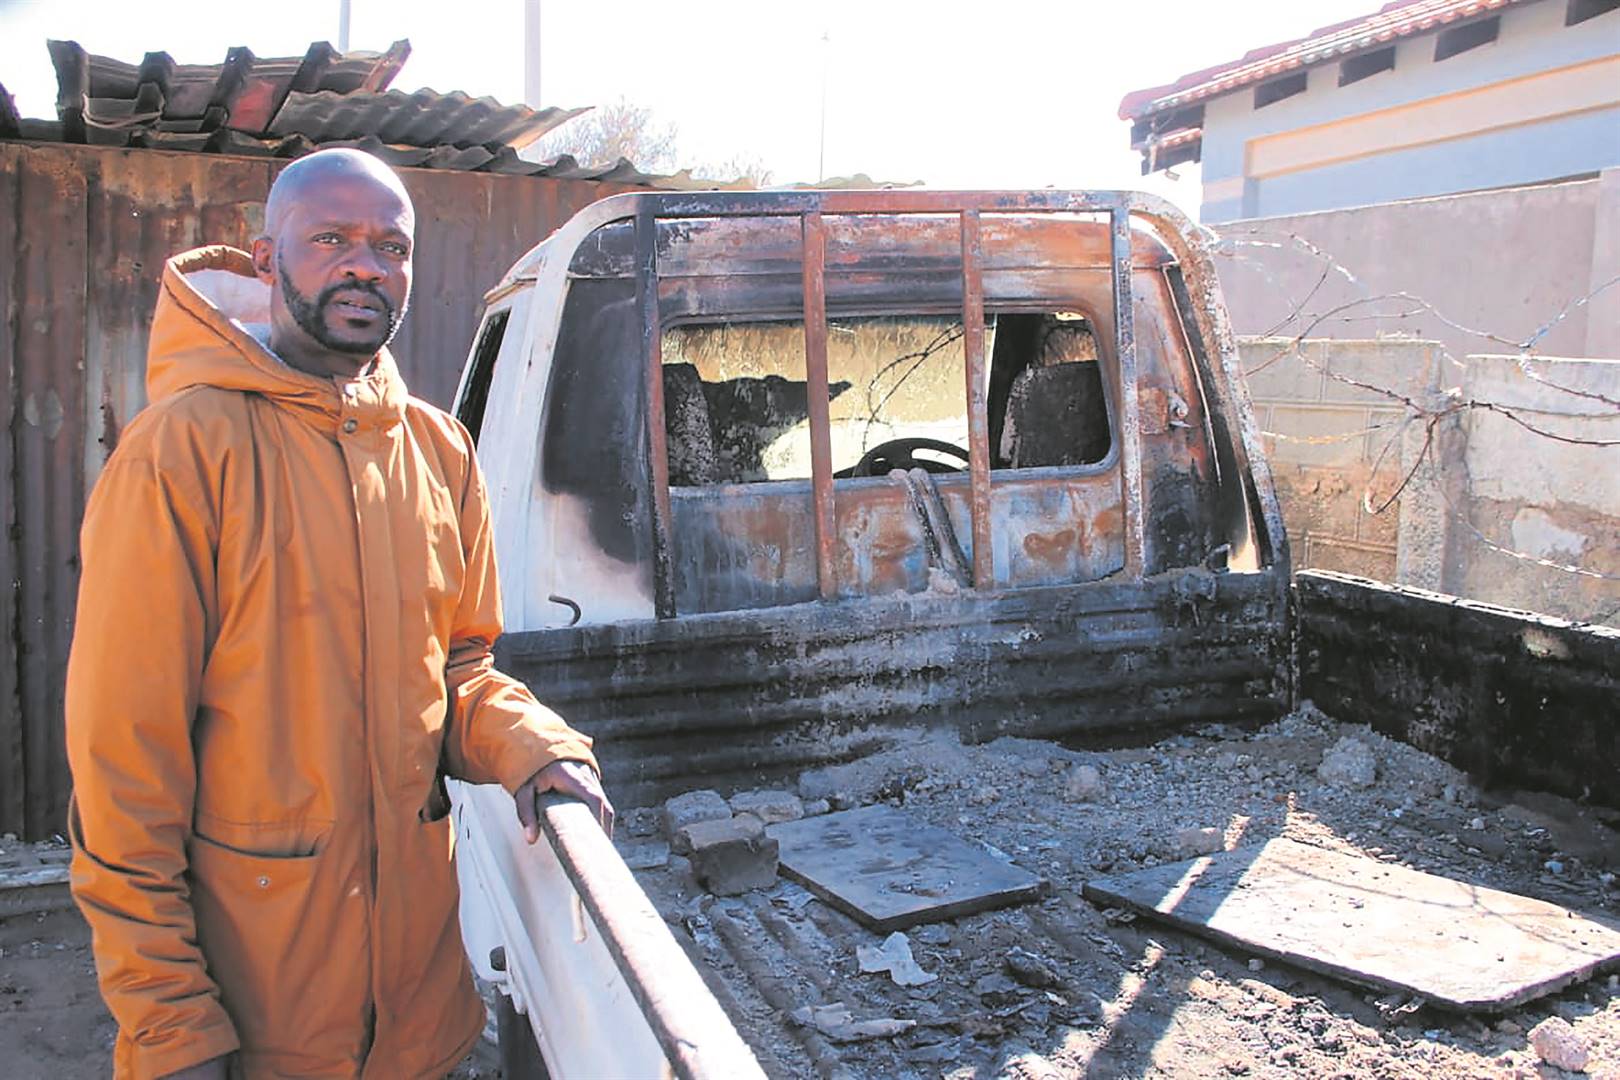 Samson Mkansi next to his burnt bakkie.    Photo by Phineas Khoza